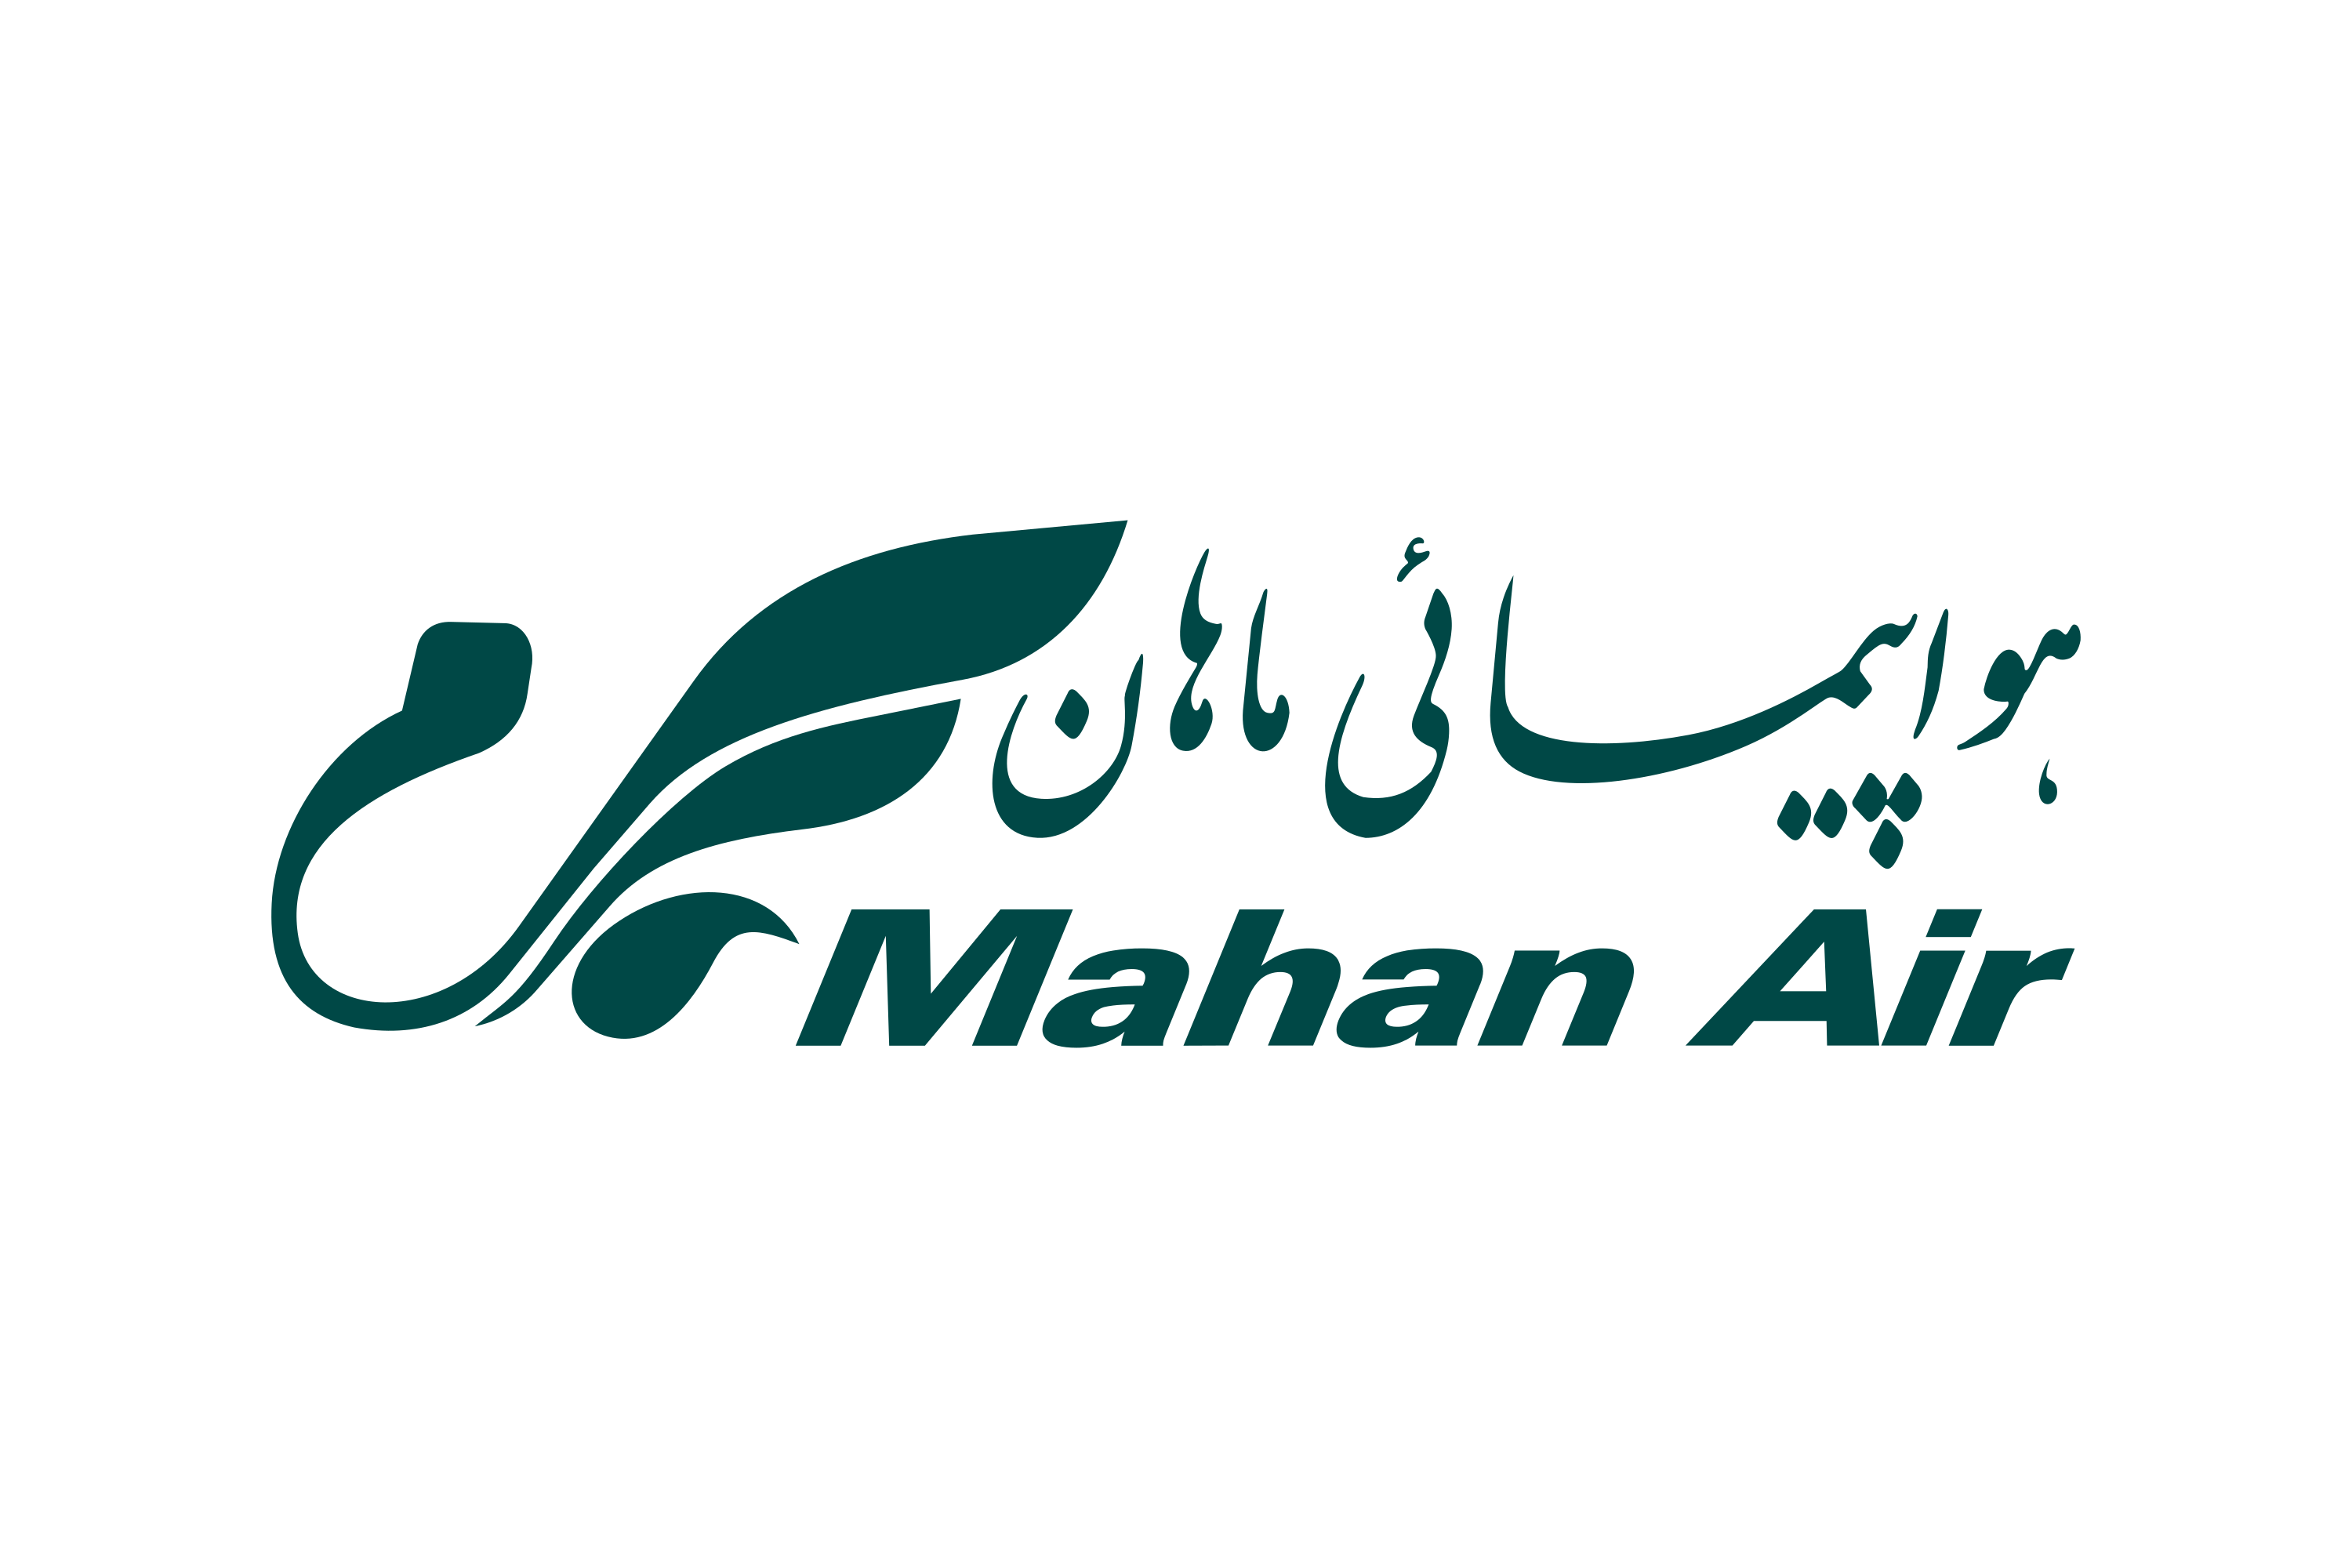 Download Mahan Air Logo in SVG Vector or PNG File Format - Logo.wine